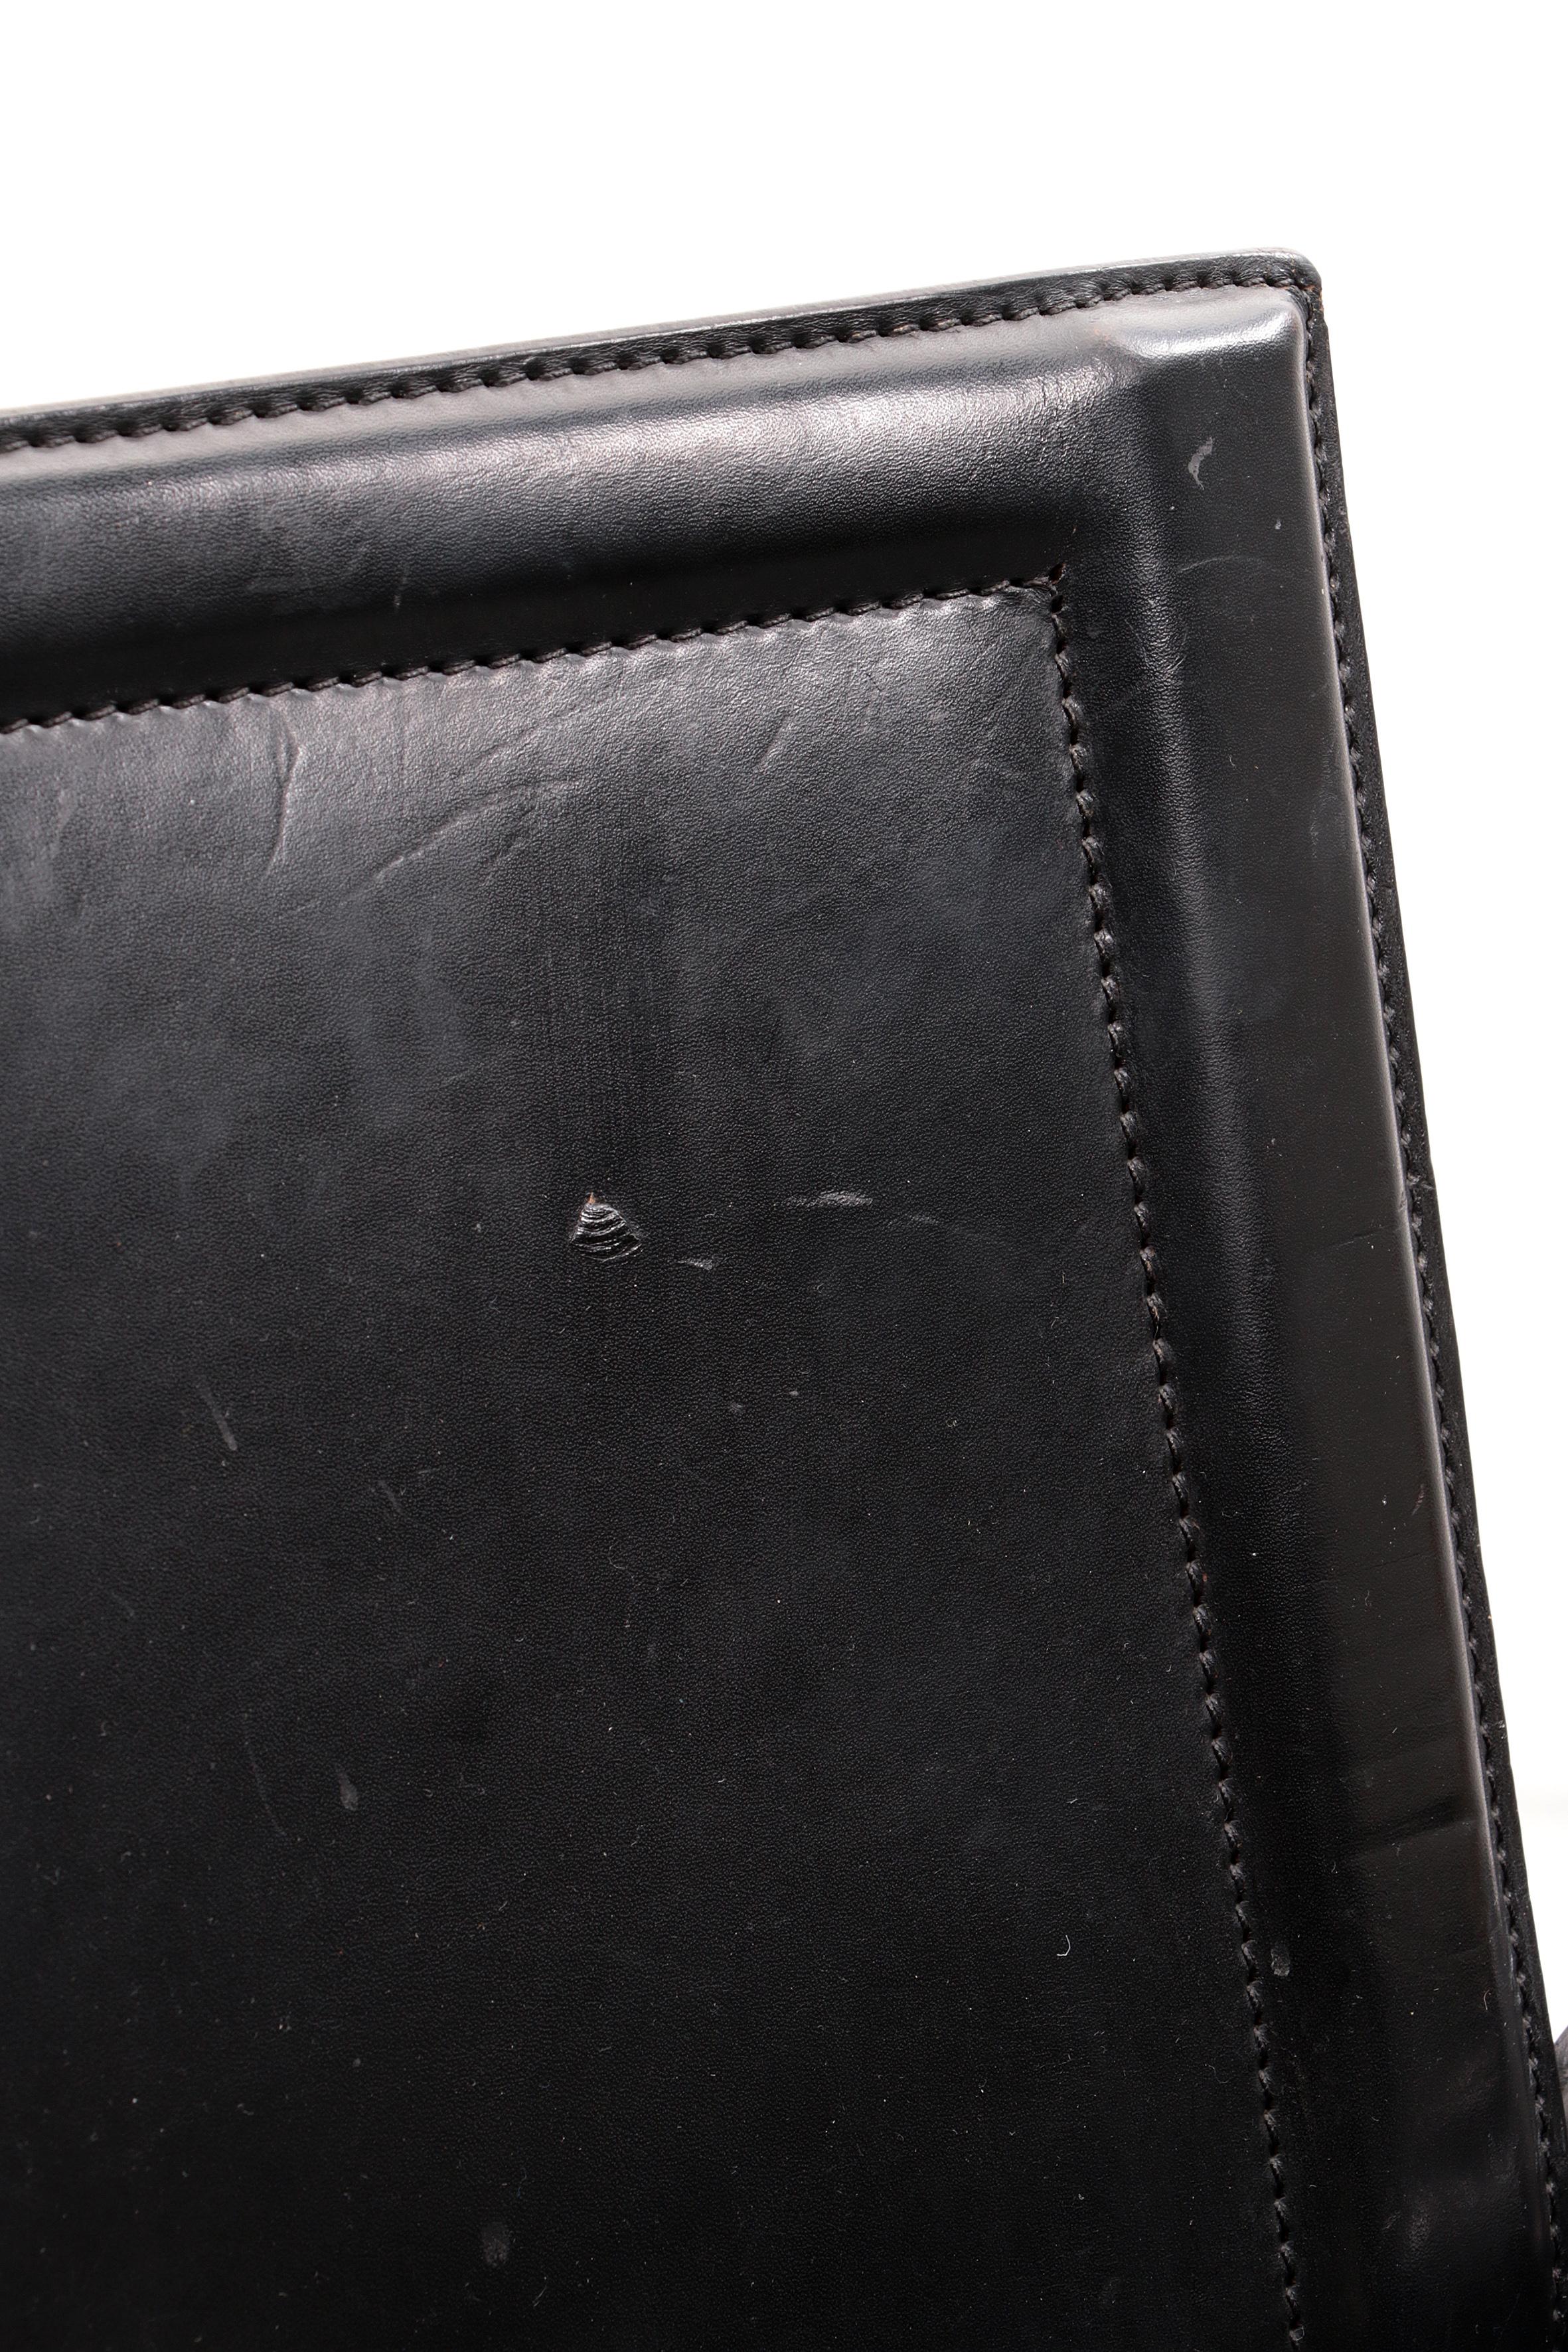 Matteo Grassi Korium Armchair Black Leather, 1970 For Sale 9